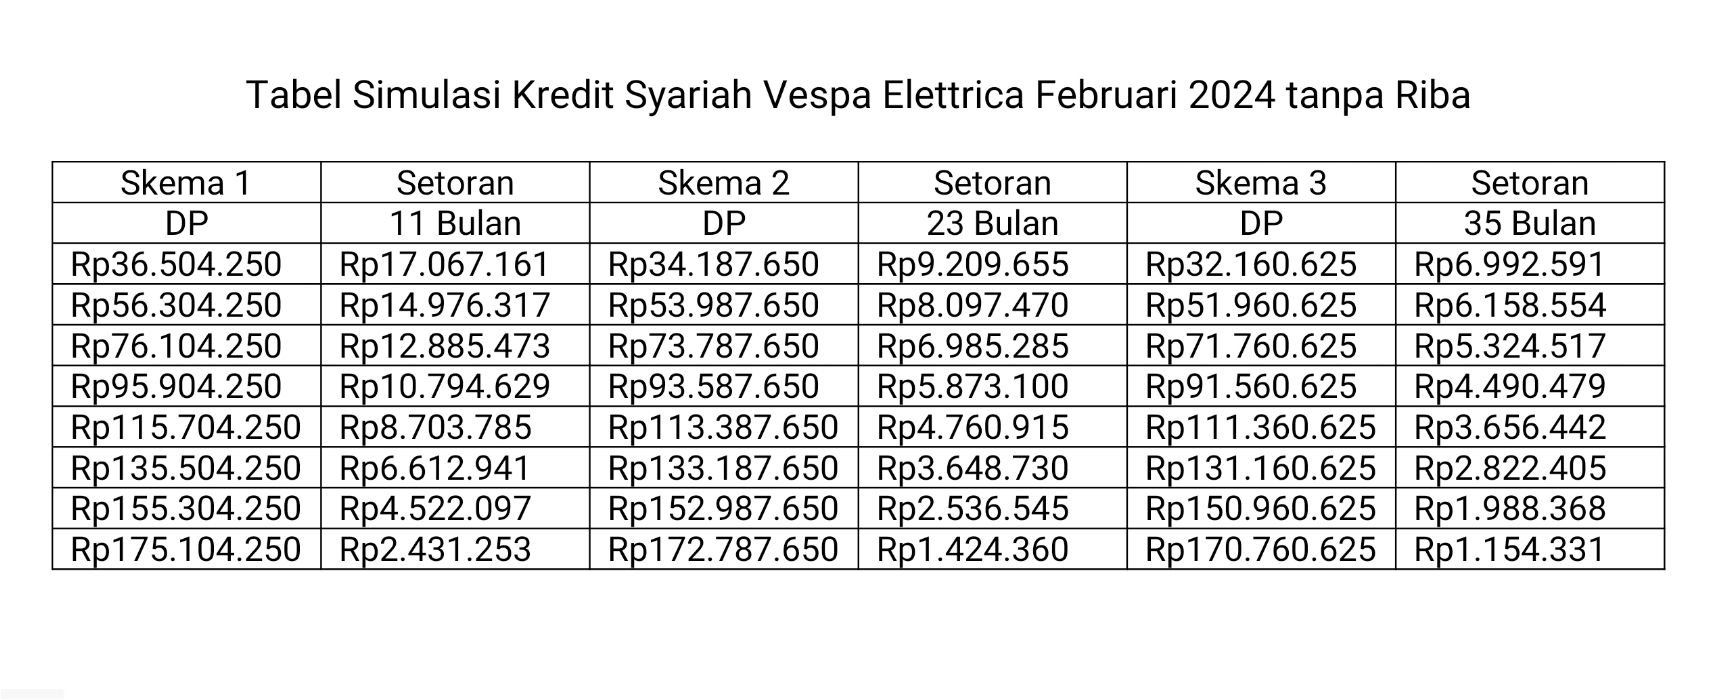 Tabel Simulasi Kredit Syariah Vespa Elettrica Februari 2024 tanpa Riba.